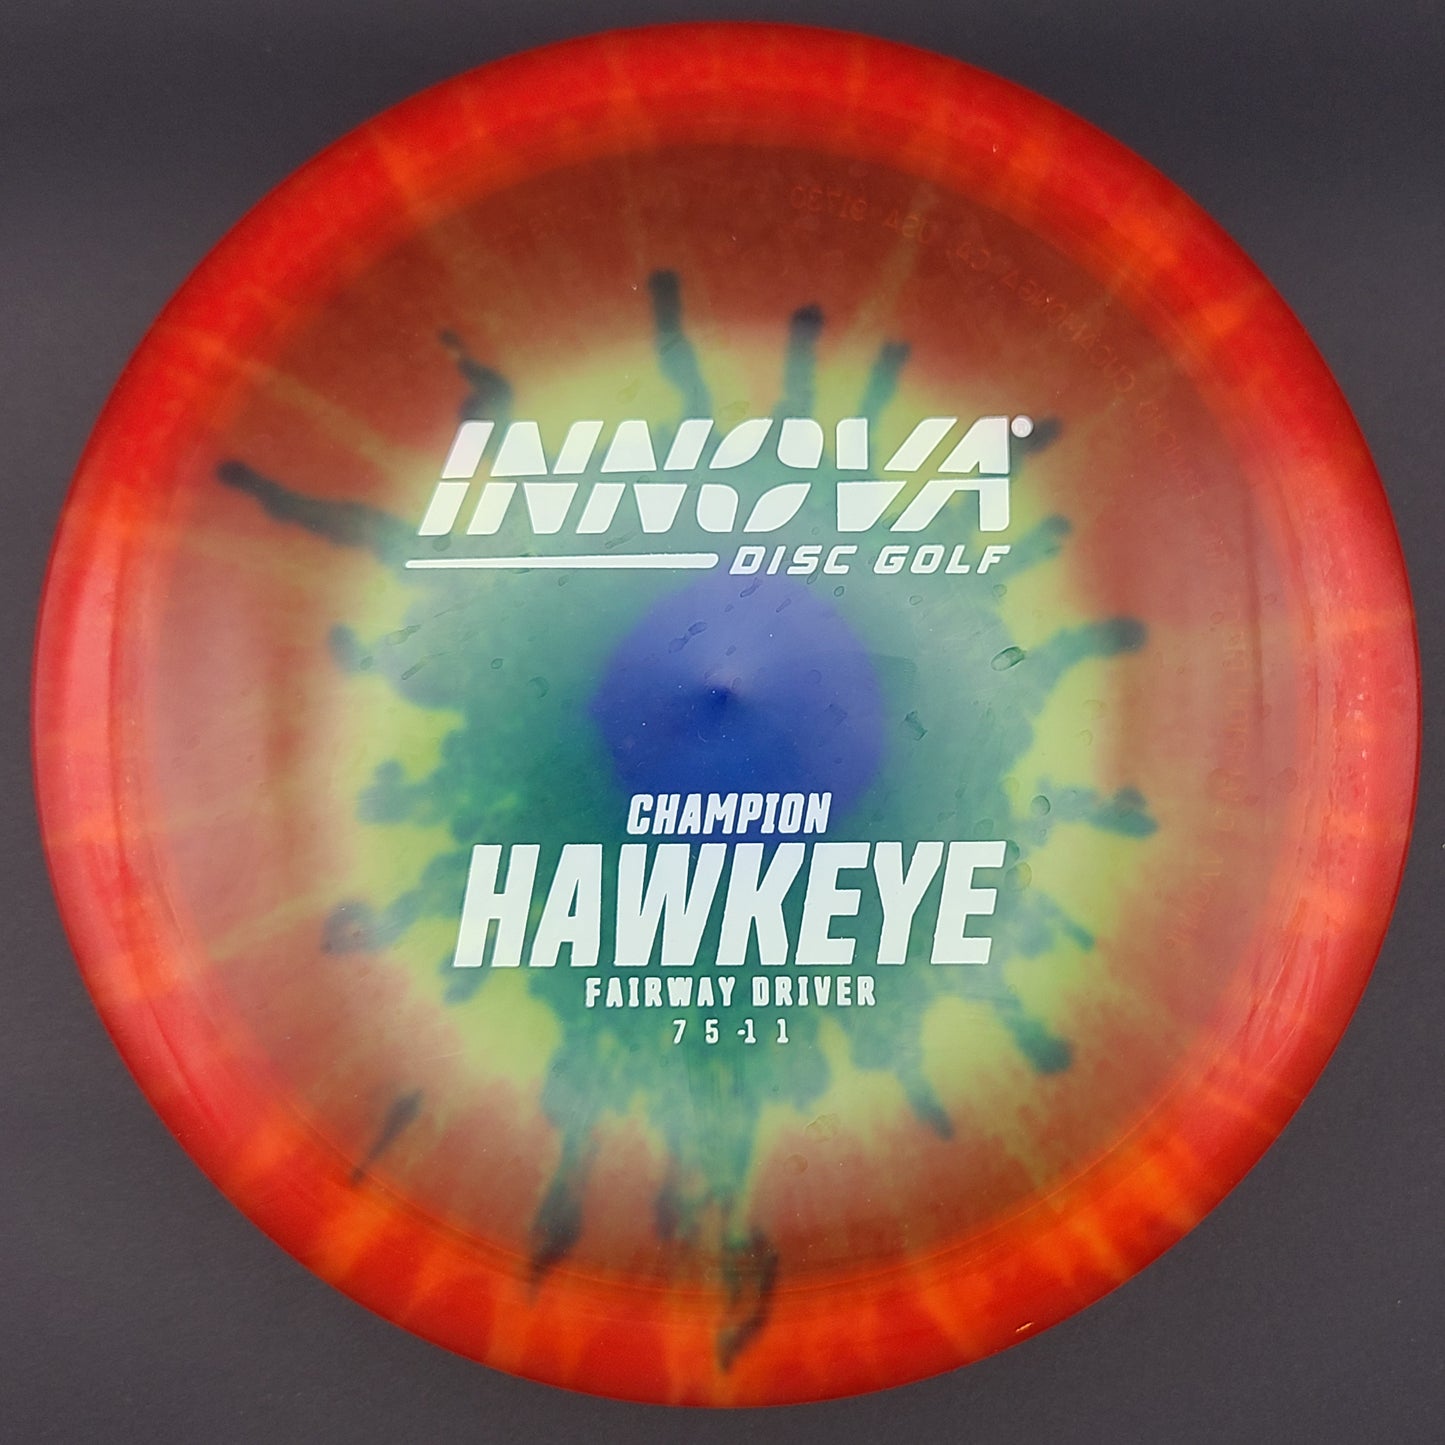 Innova - Hawkeye - I-Dye Champion